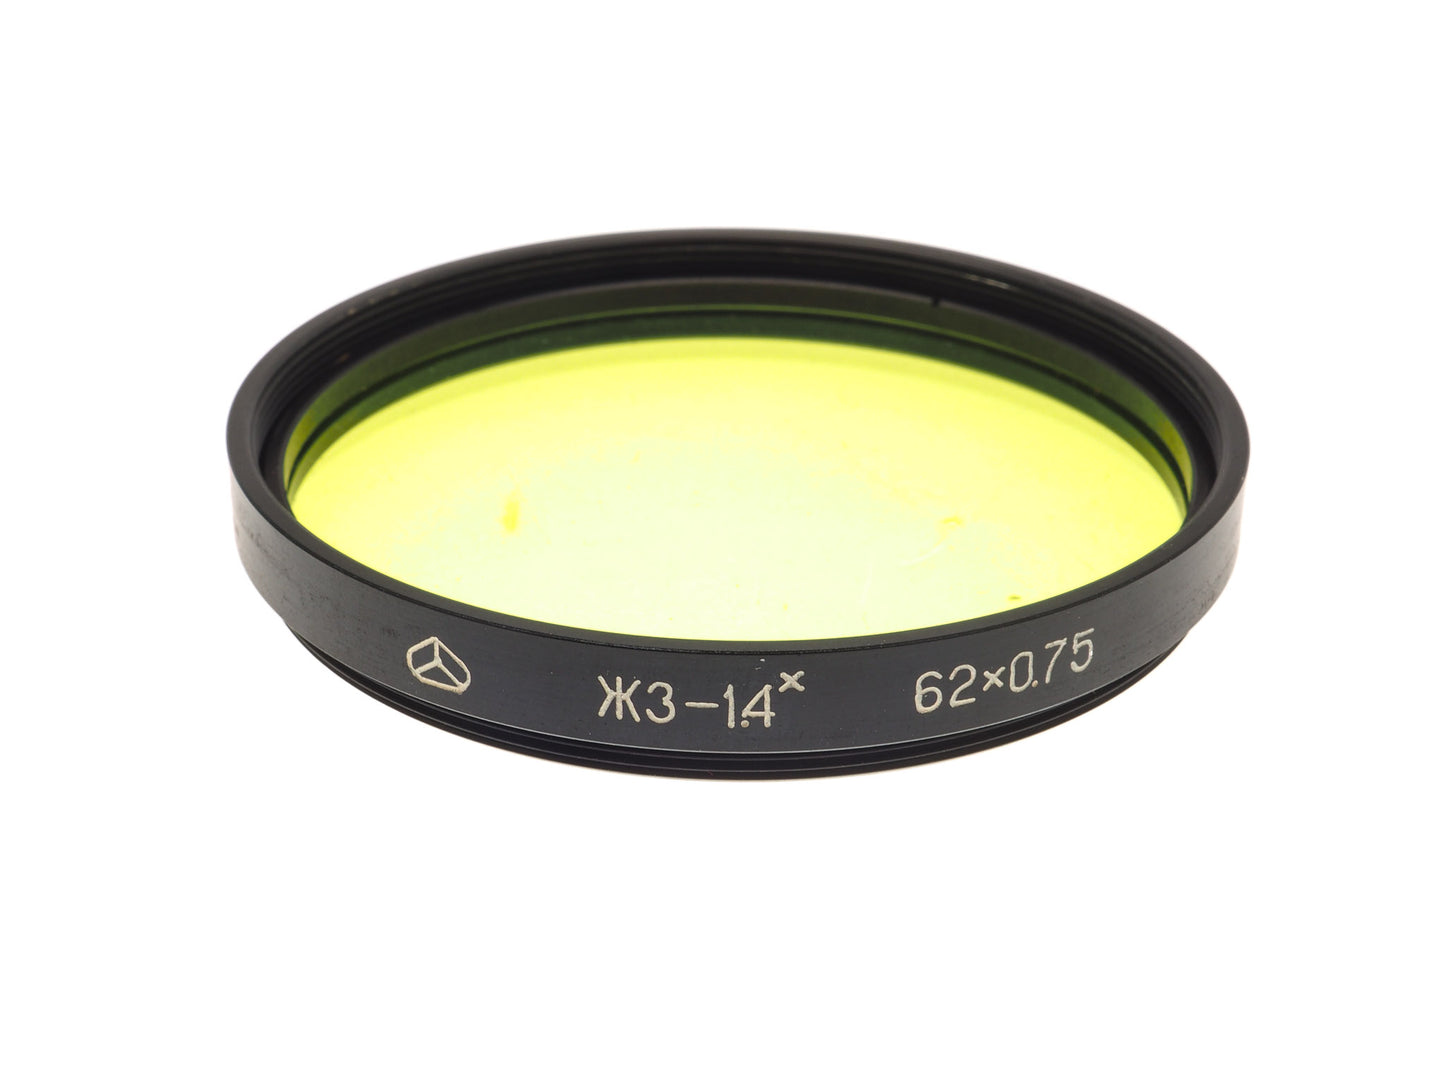 Arsenal 62mm Yellow-Green Filter Ж3-1.4x - Accessory